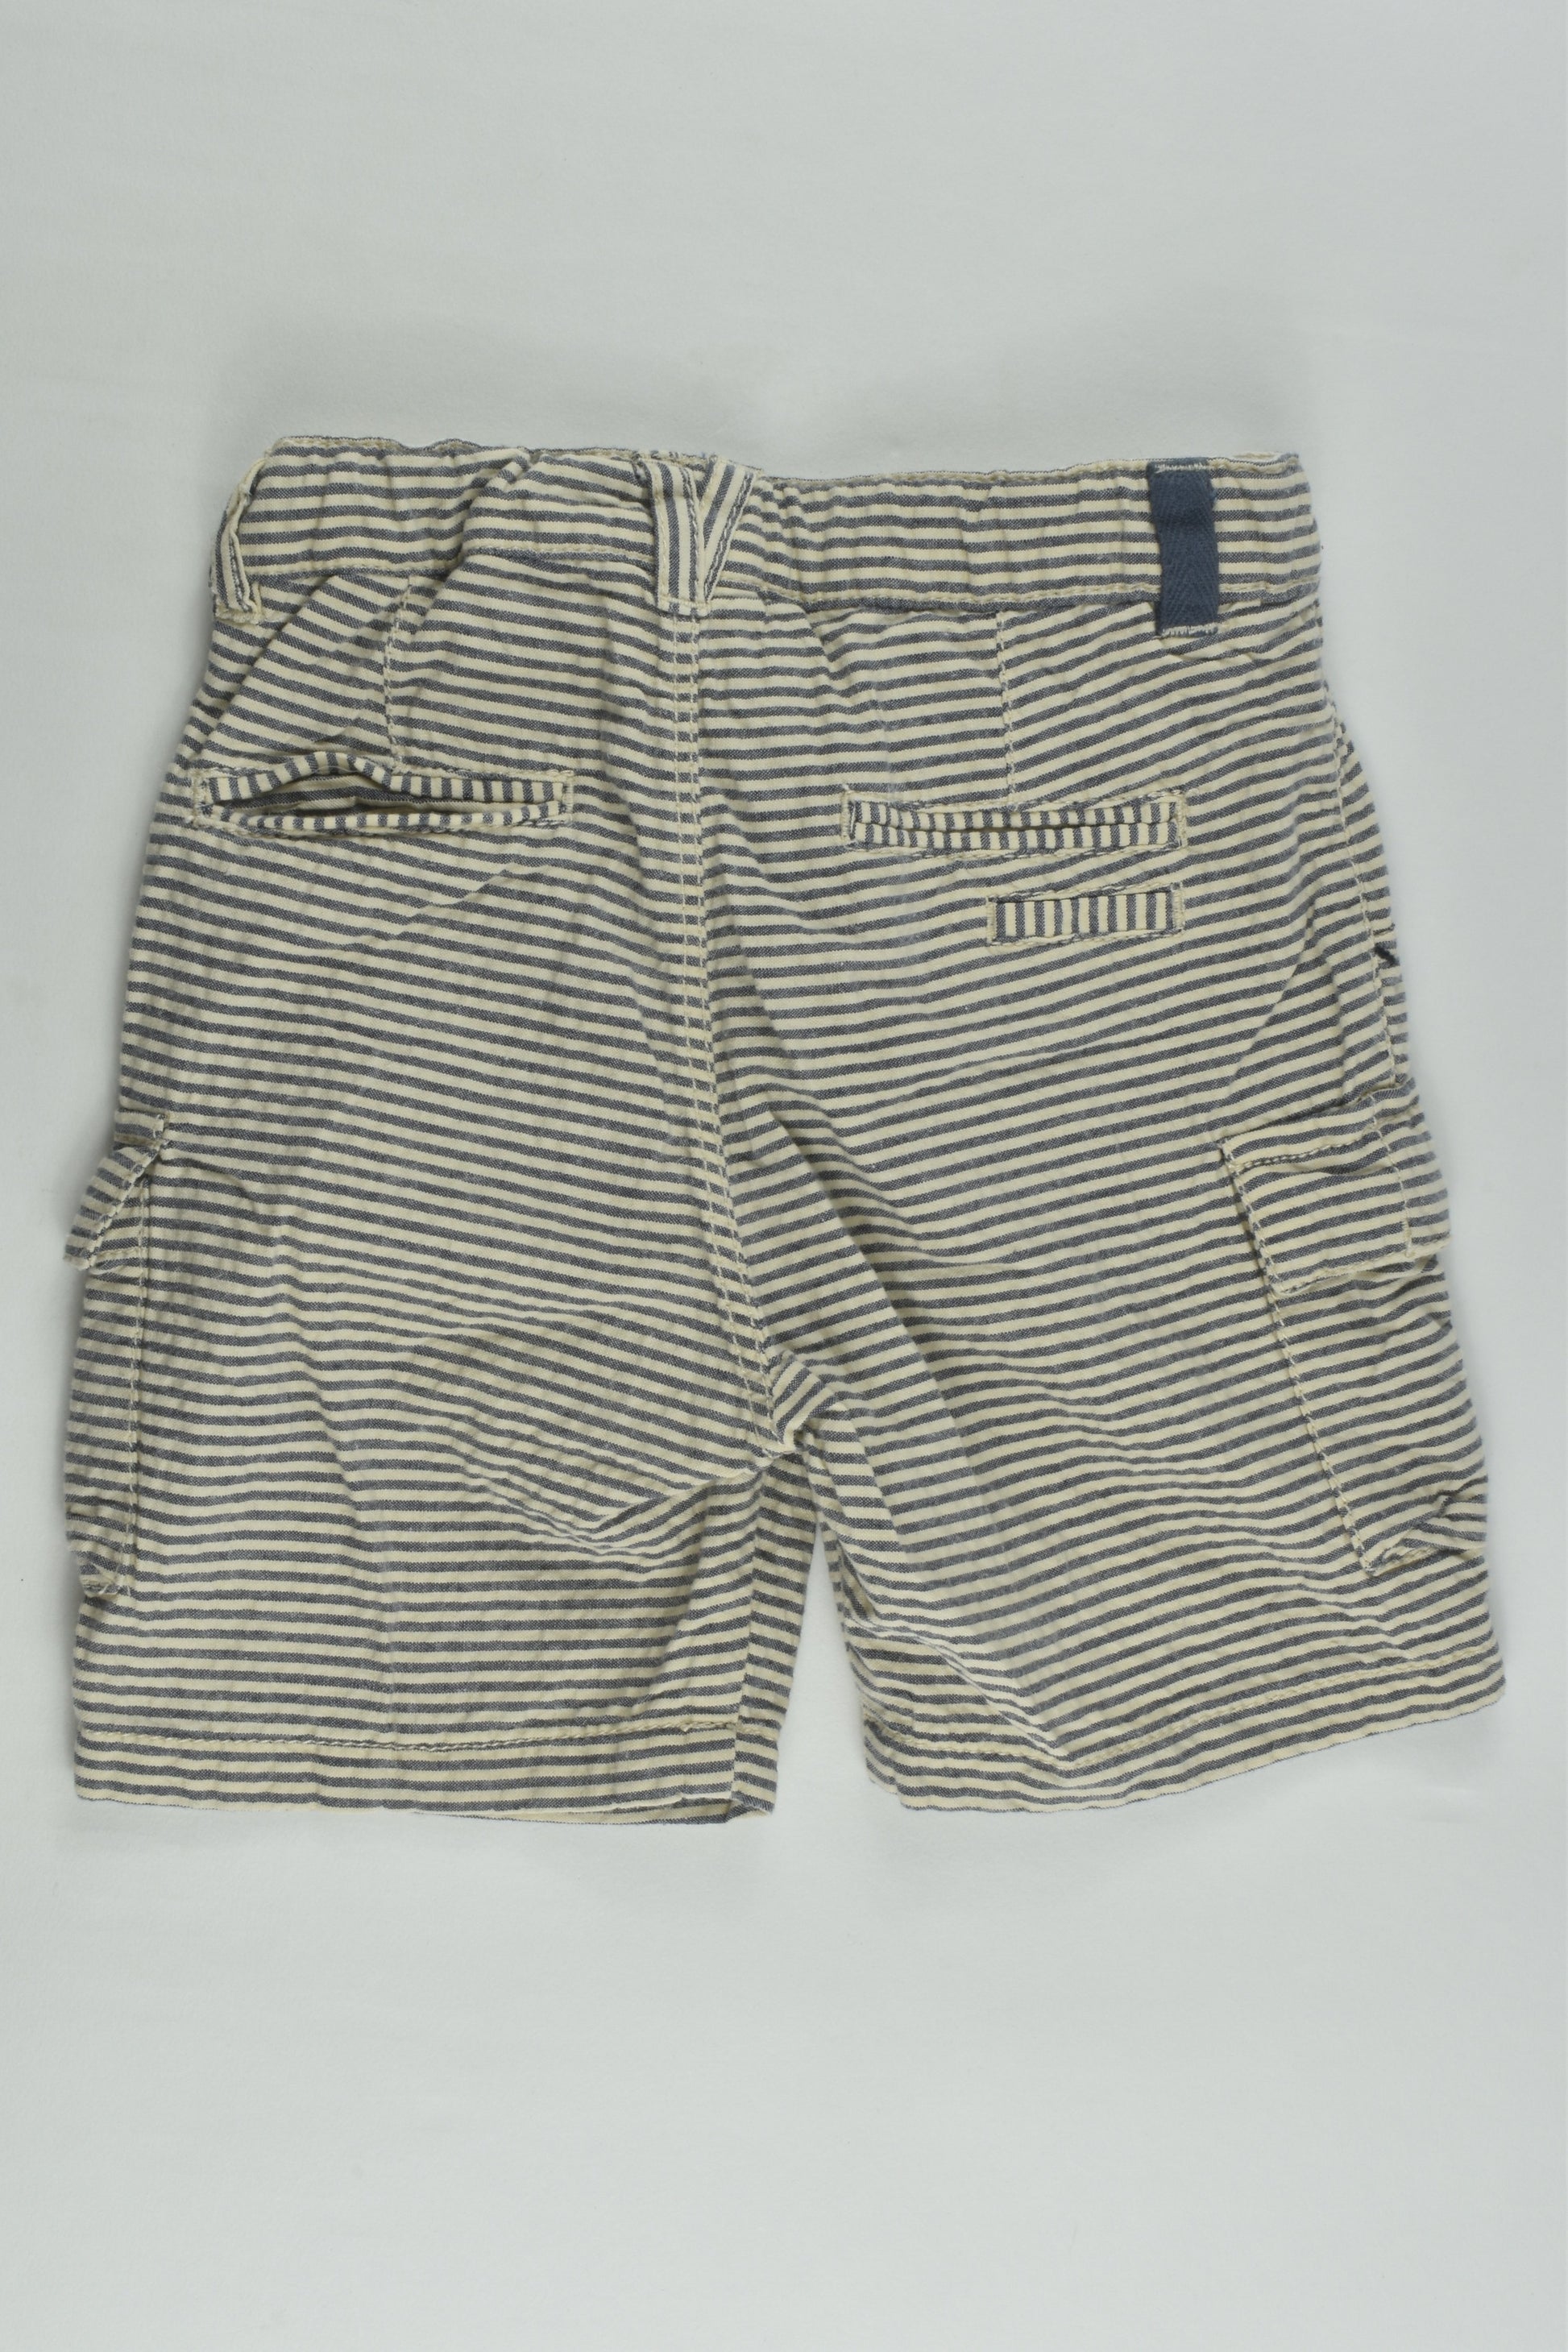 Zara Size 1 (86 cm) Lightweight Striped Shorts